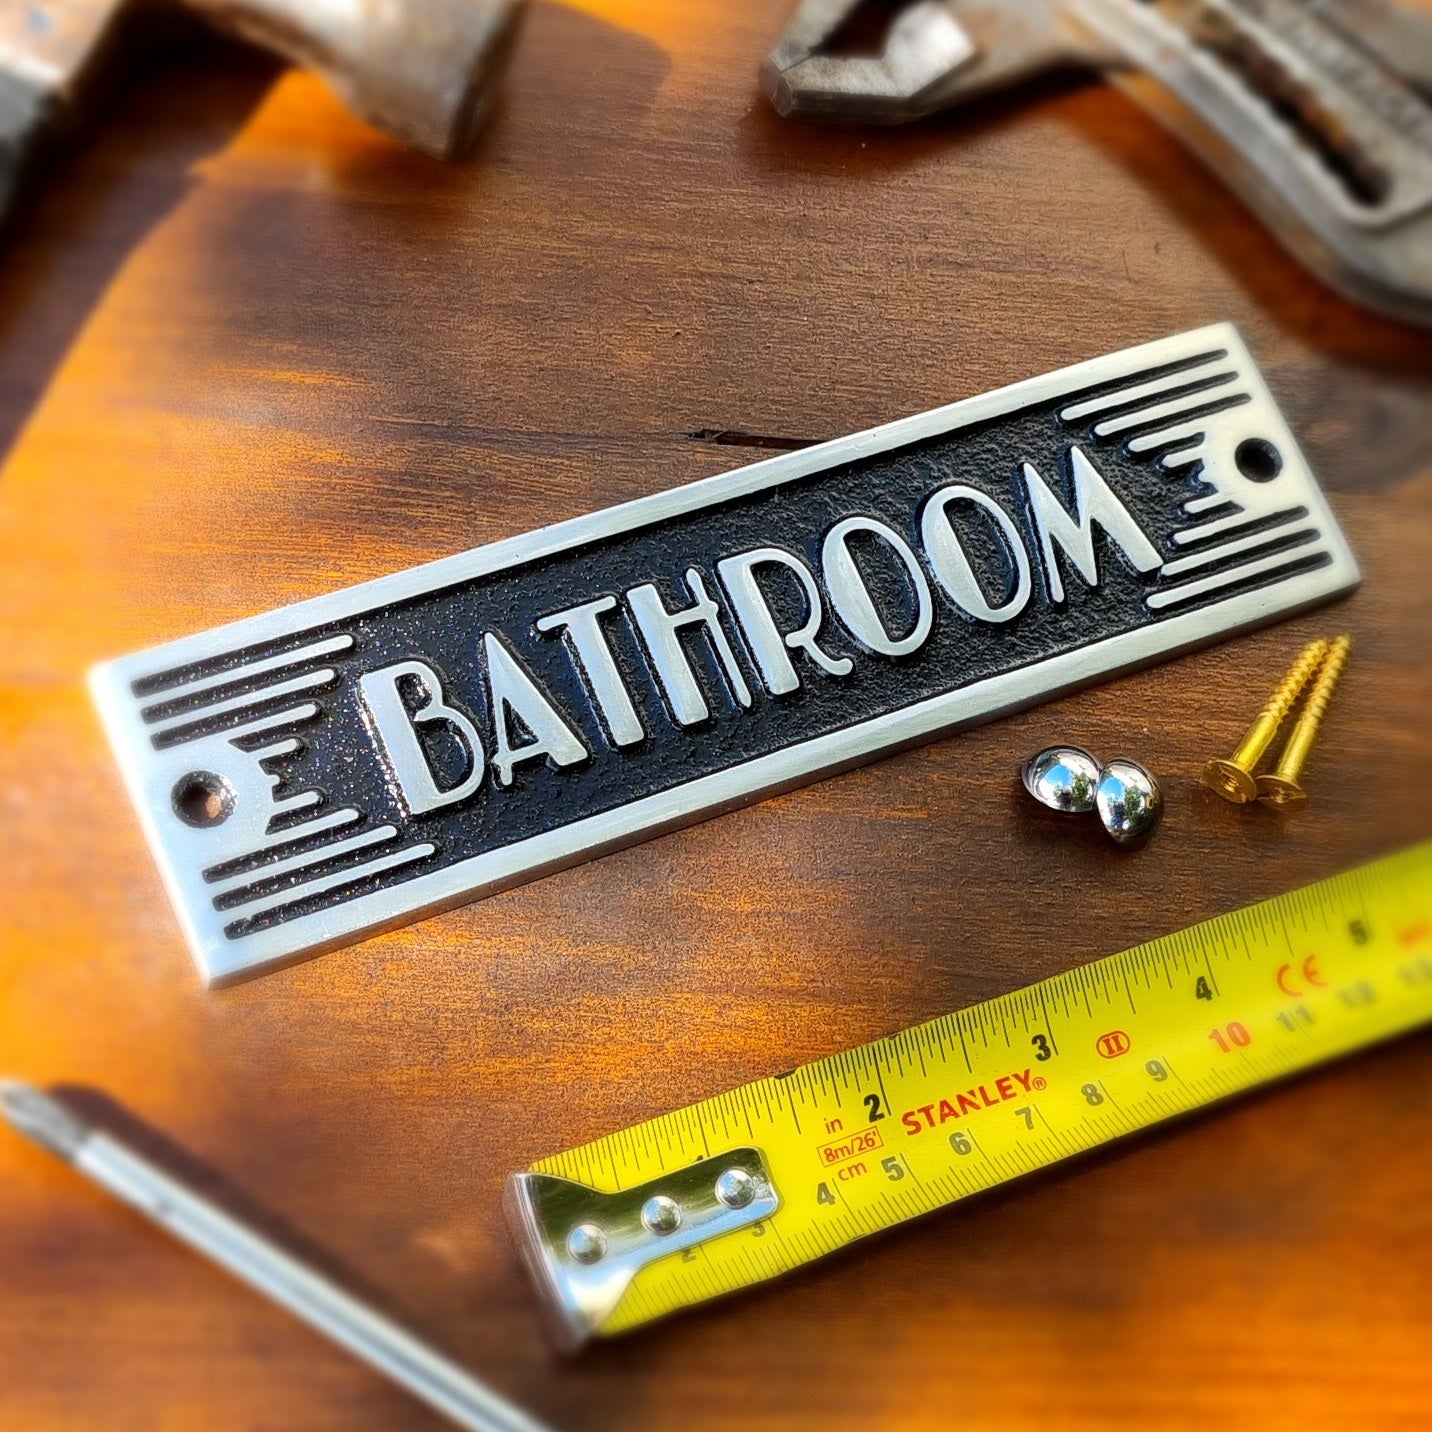 Art Deco 'Bathroom' Sign - The Metal Foundry